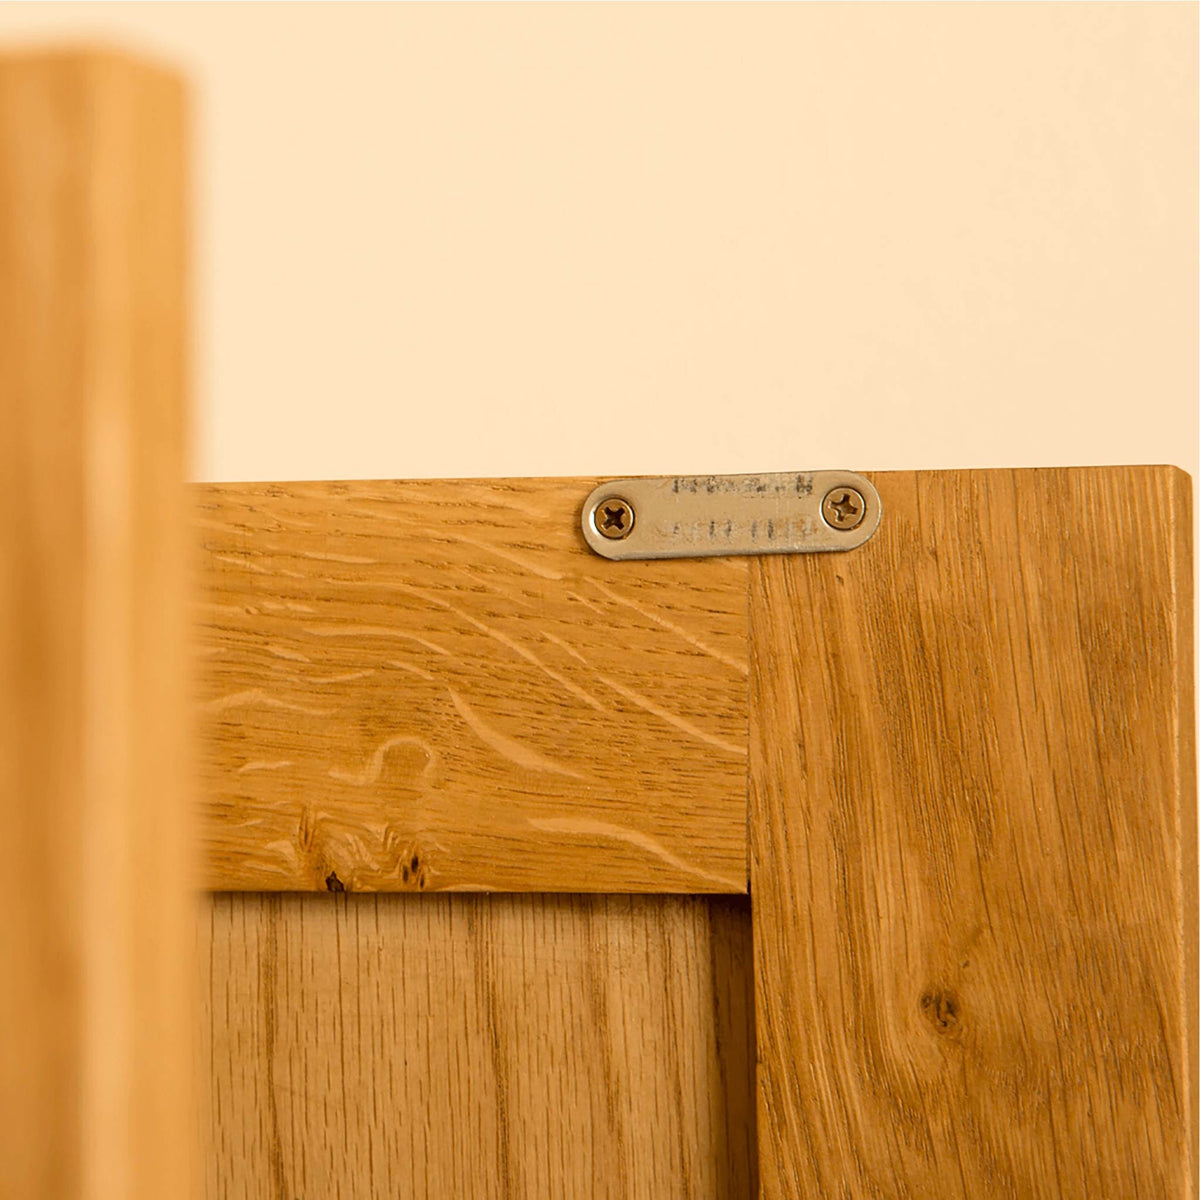 Lanner Oak Small Sideboard inside door view